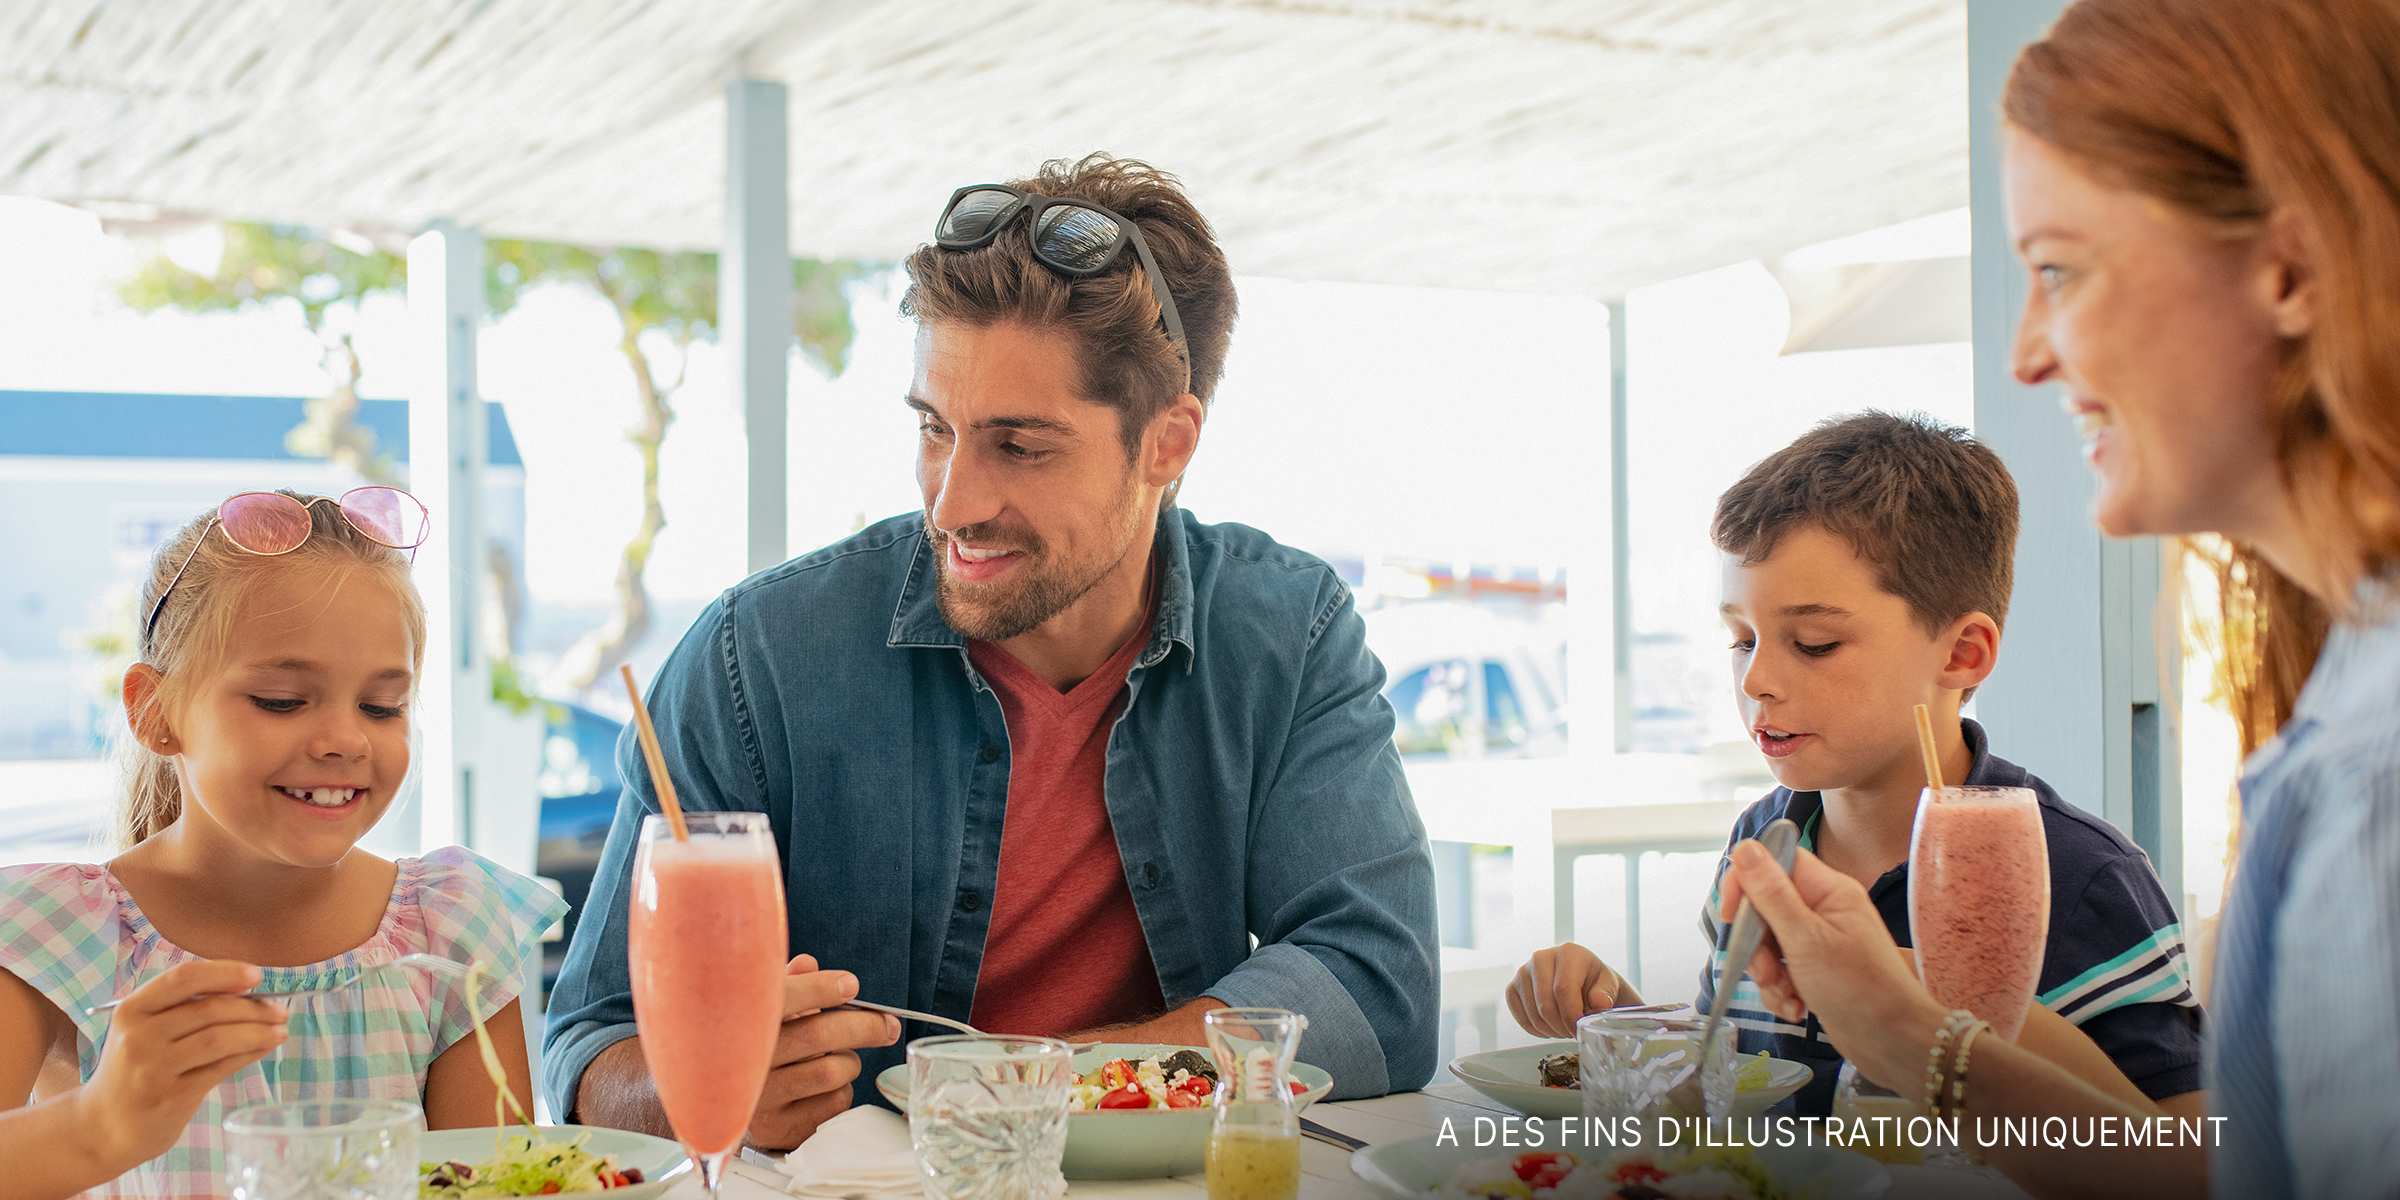 Une famille mangeant dans un restaurant | Source : Shutterstock